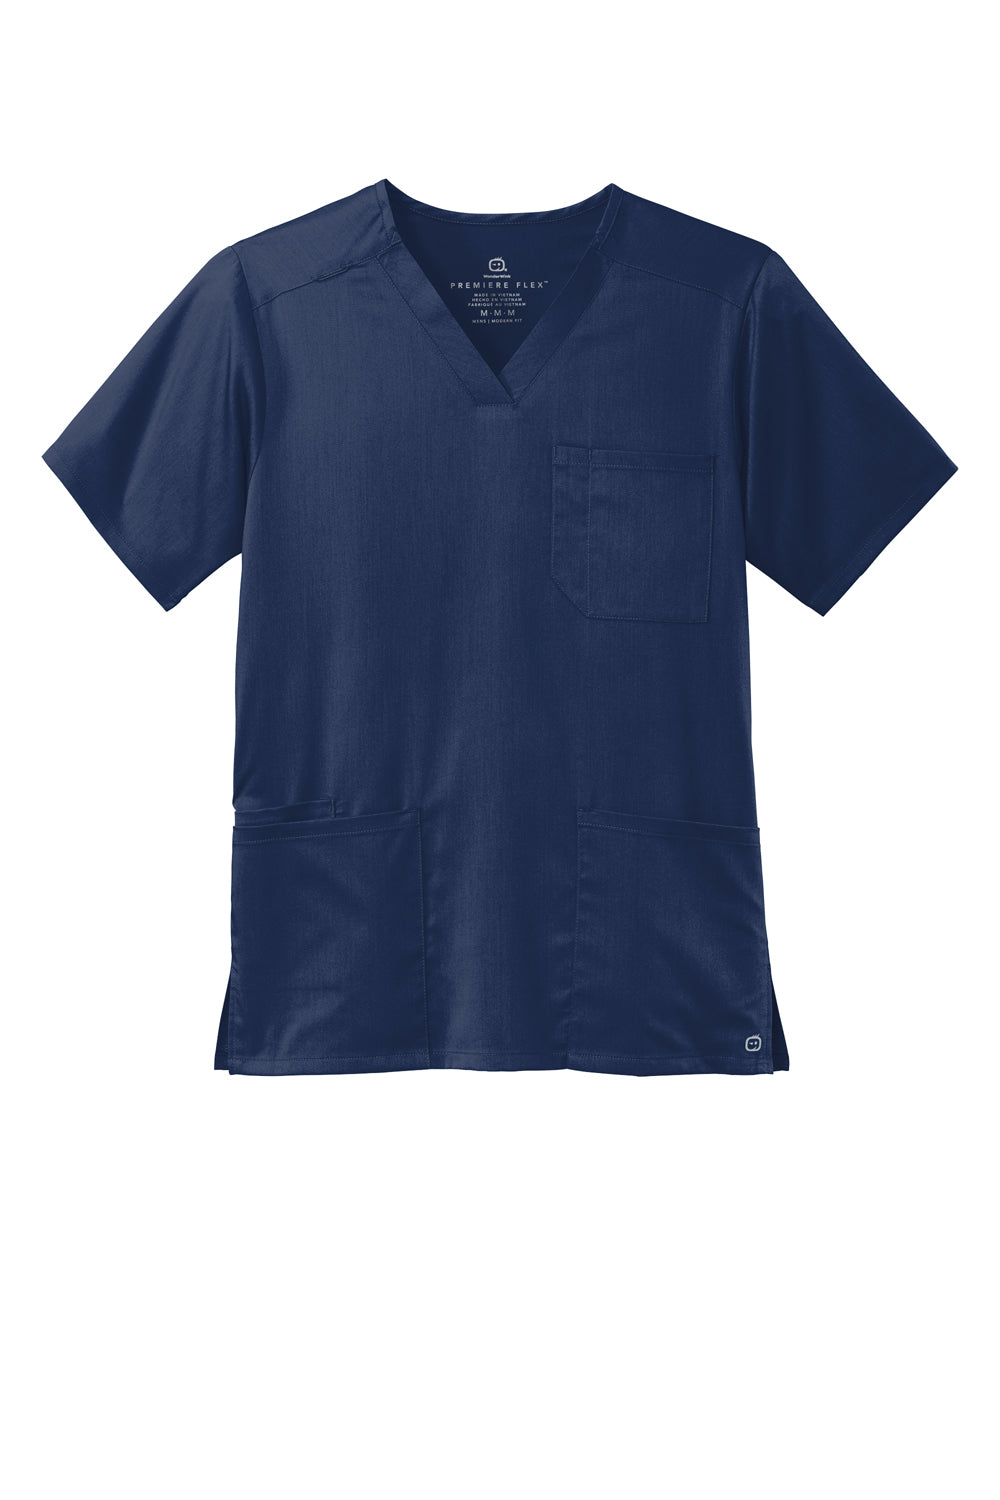 Wonderwink WW5068 Premiere Flex Short Sleeve V-Neck Shirt Navy Blue Flat Front